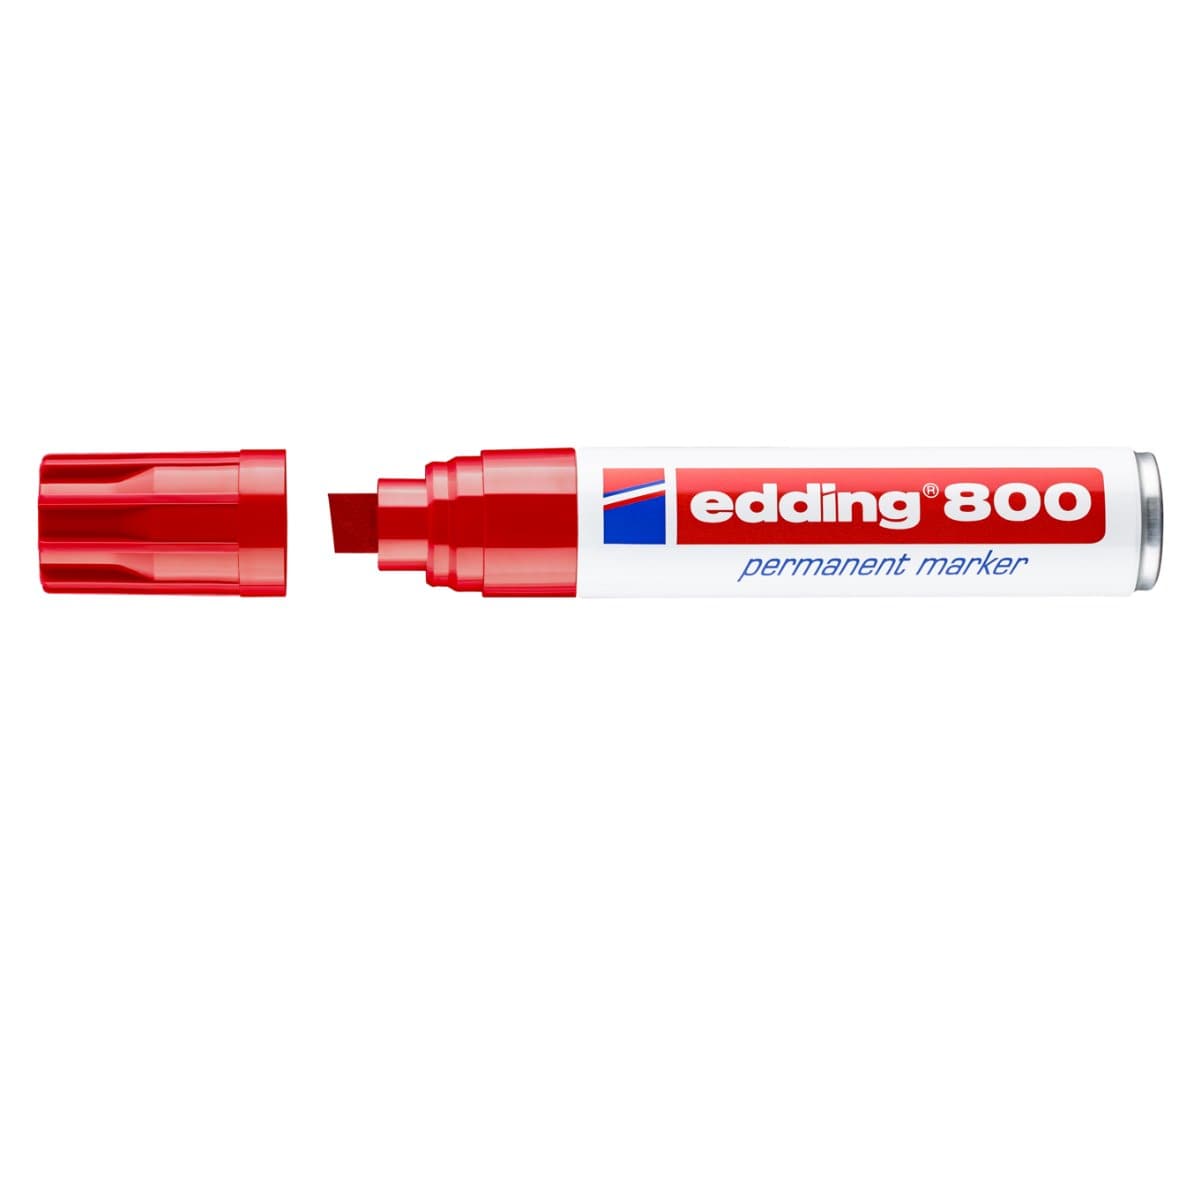 edding 800 Permanent Marker, 4-12mm Chisel Tip, Red